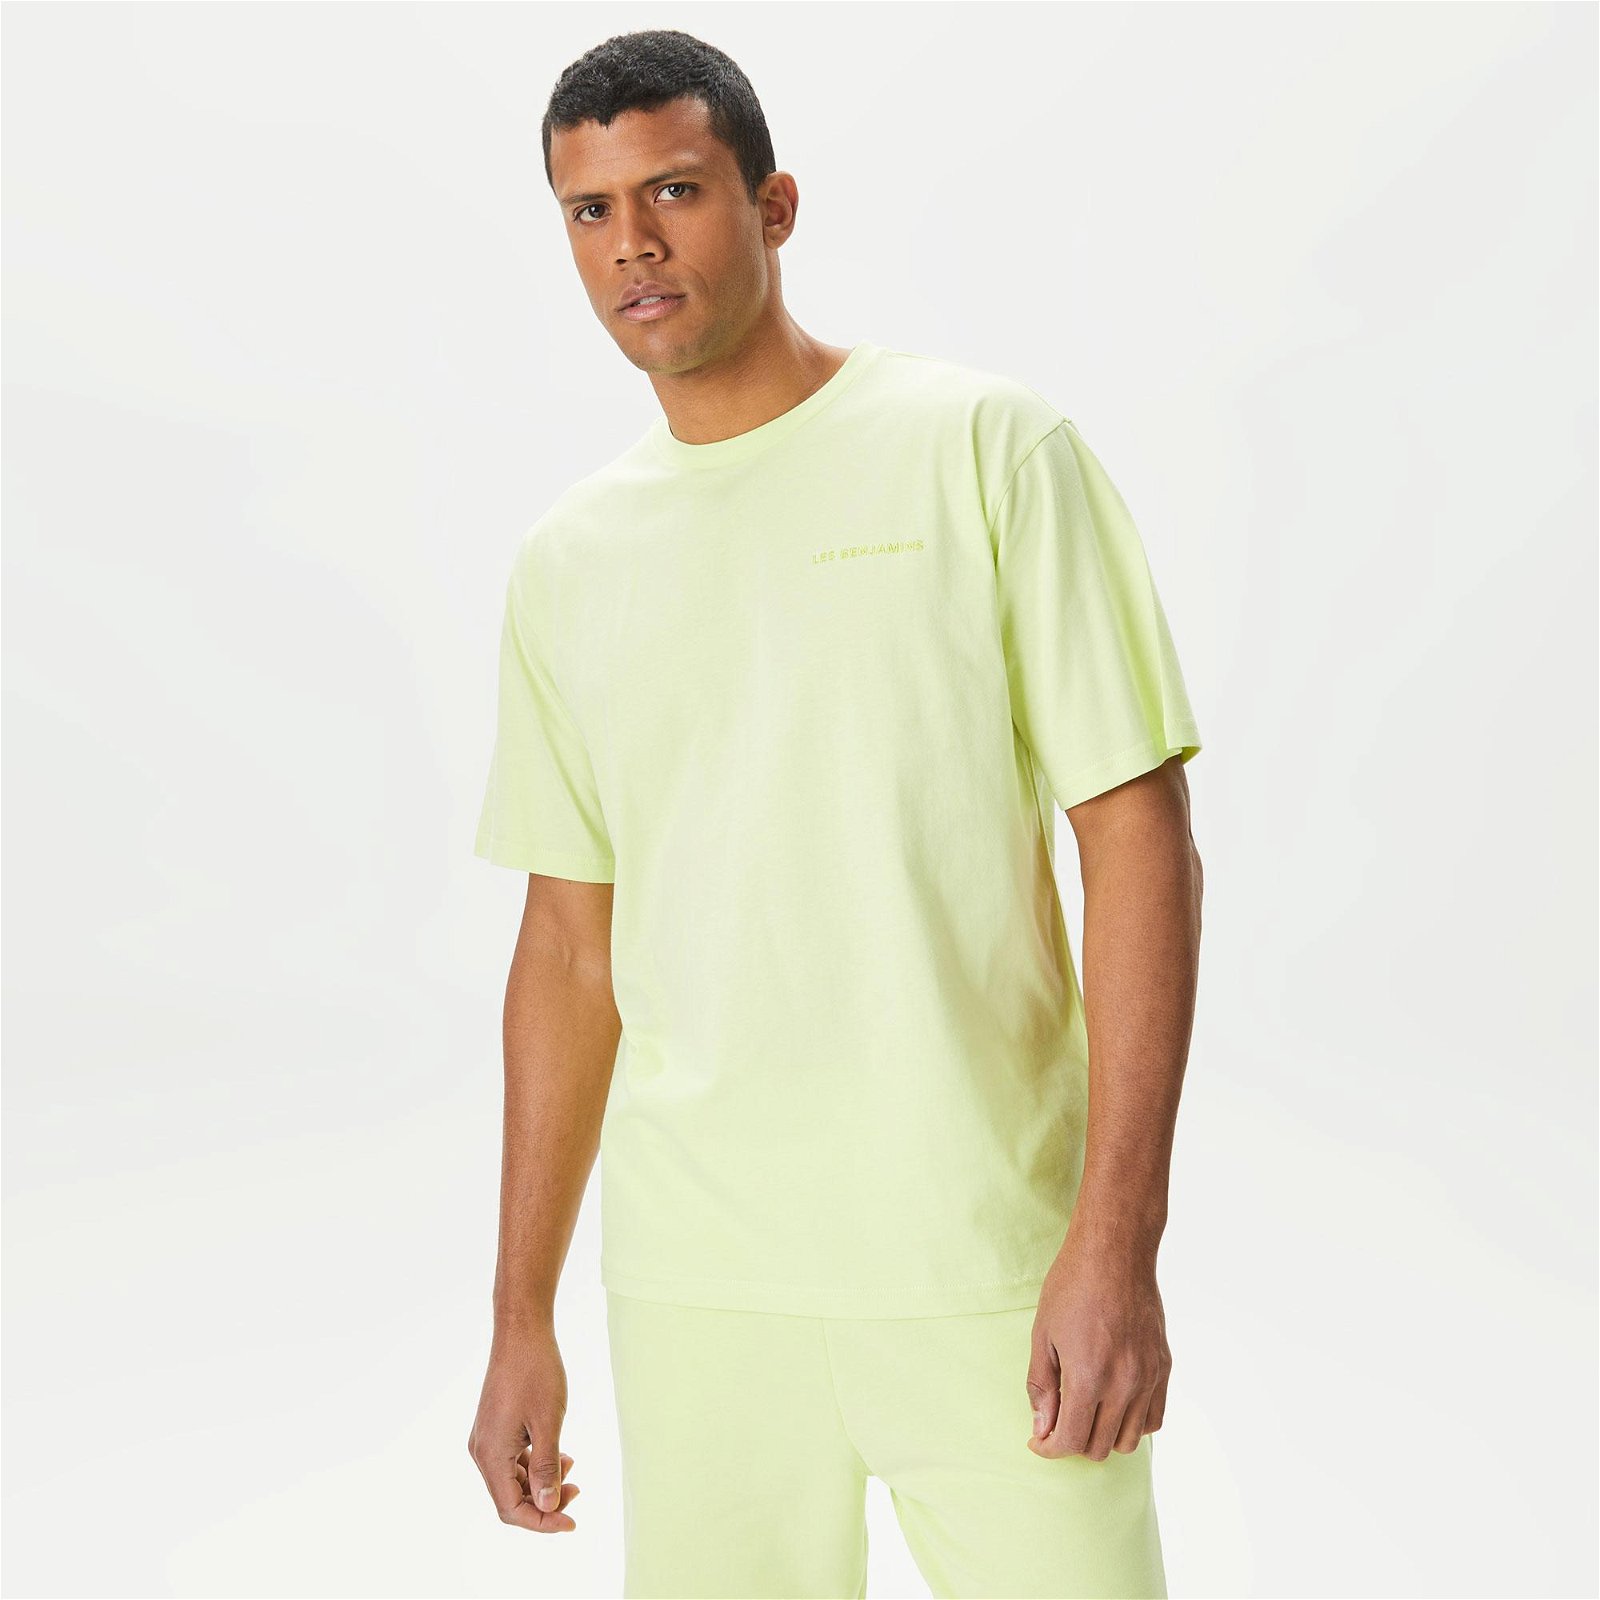 Les Benjamins Essentials 301 Erkek Yeşil T-Shirt